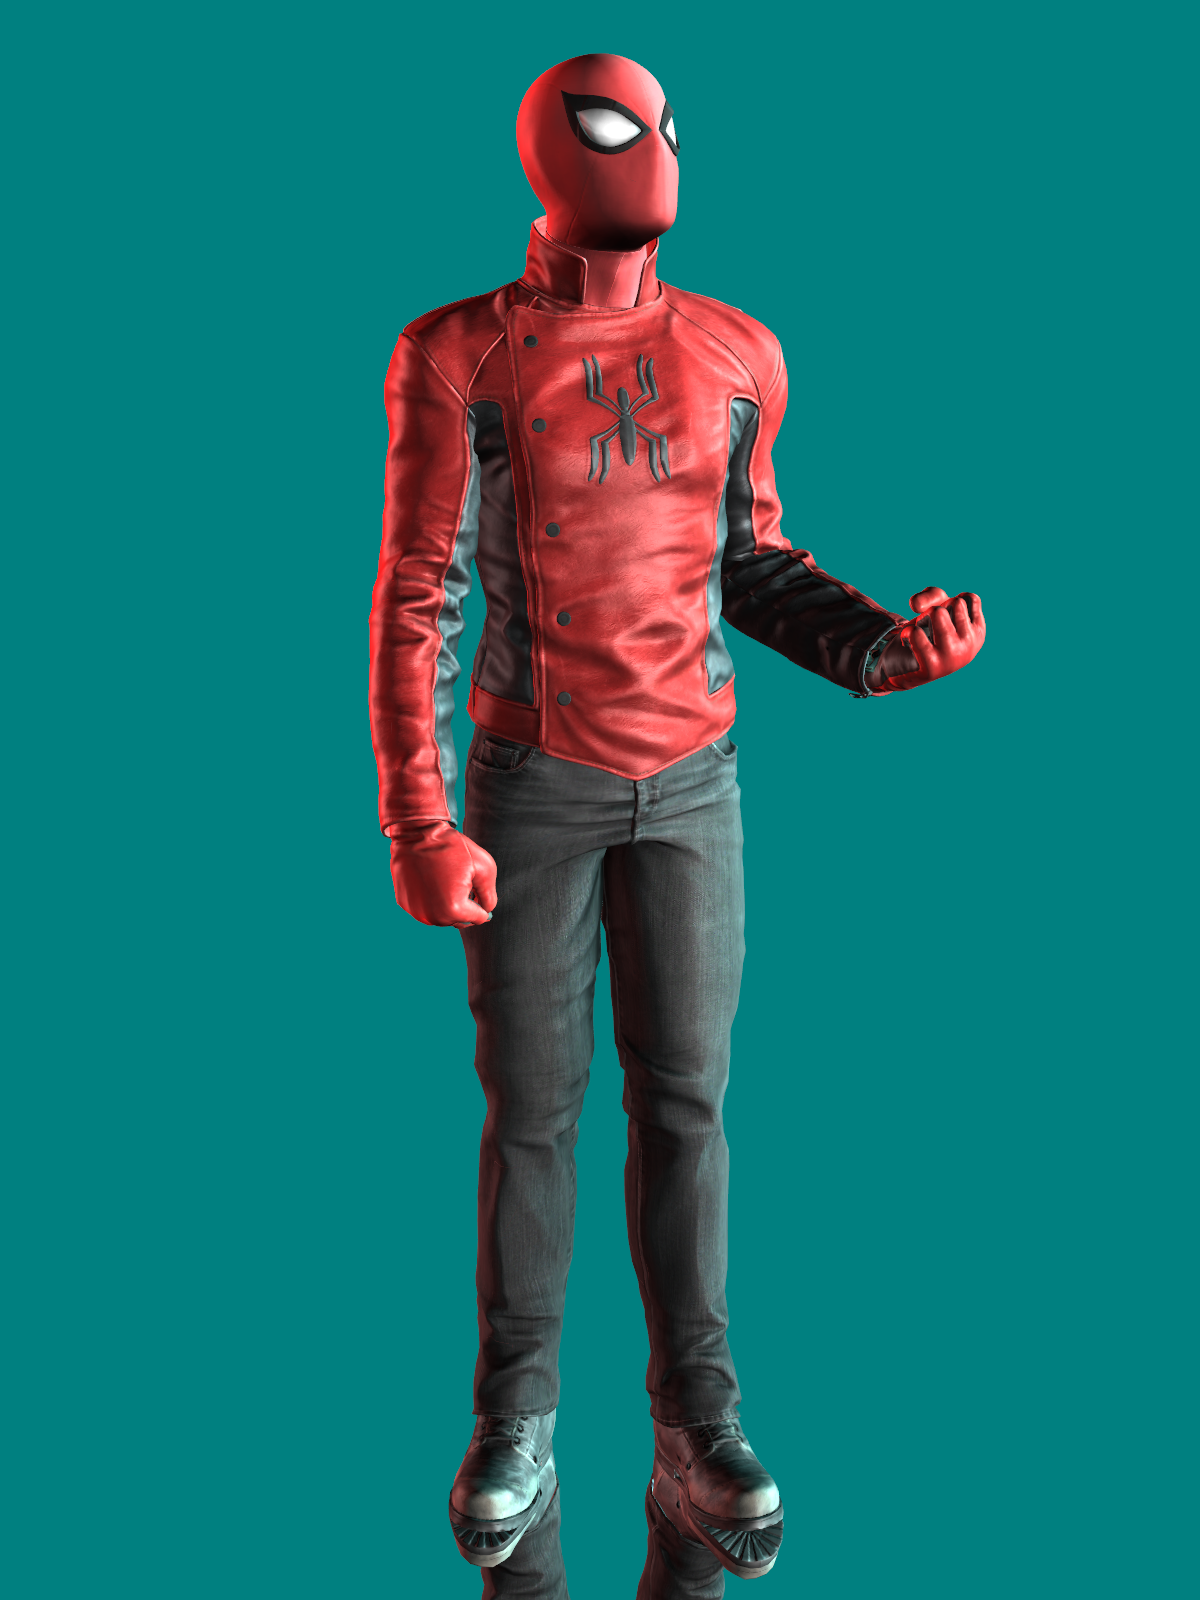 Spider-man PS4 - Last Stand Costume by DatKofGuy on DeviantArt